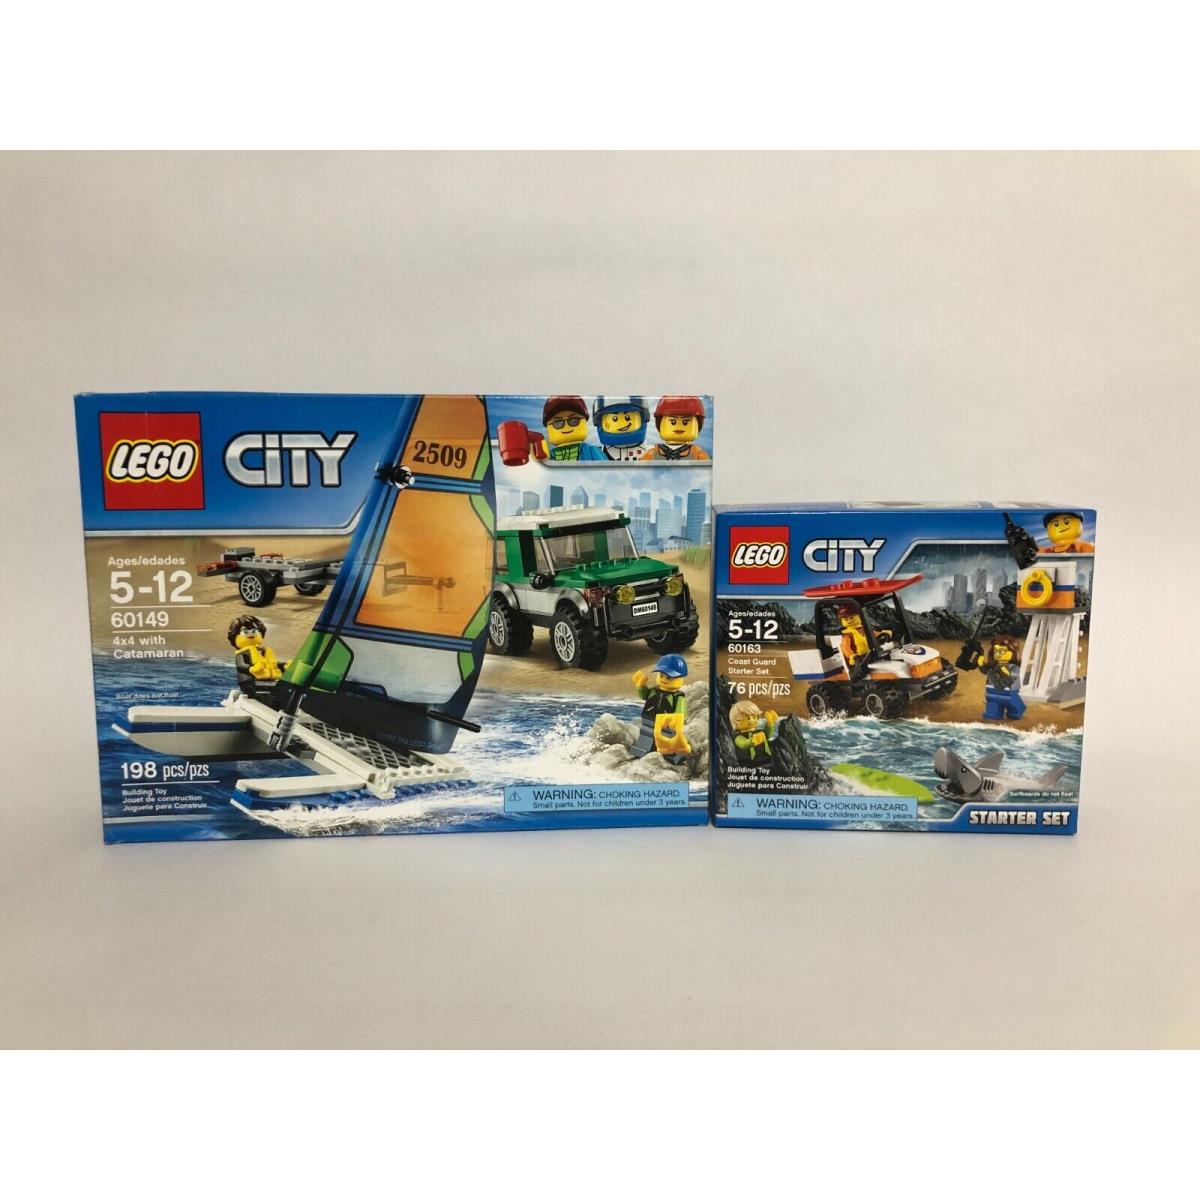 Lego City 60149 4x4 with Catamaran and 60163 Coast Guard Starter Set